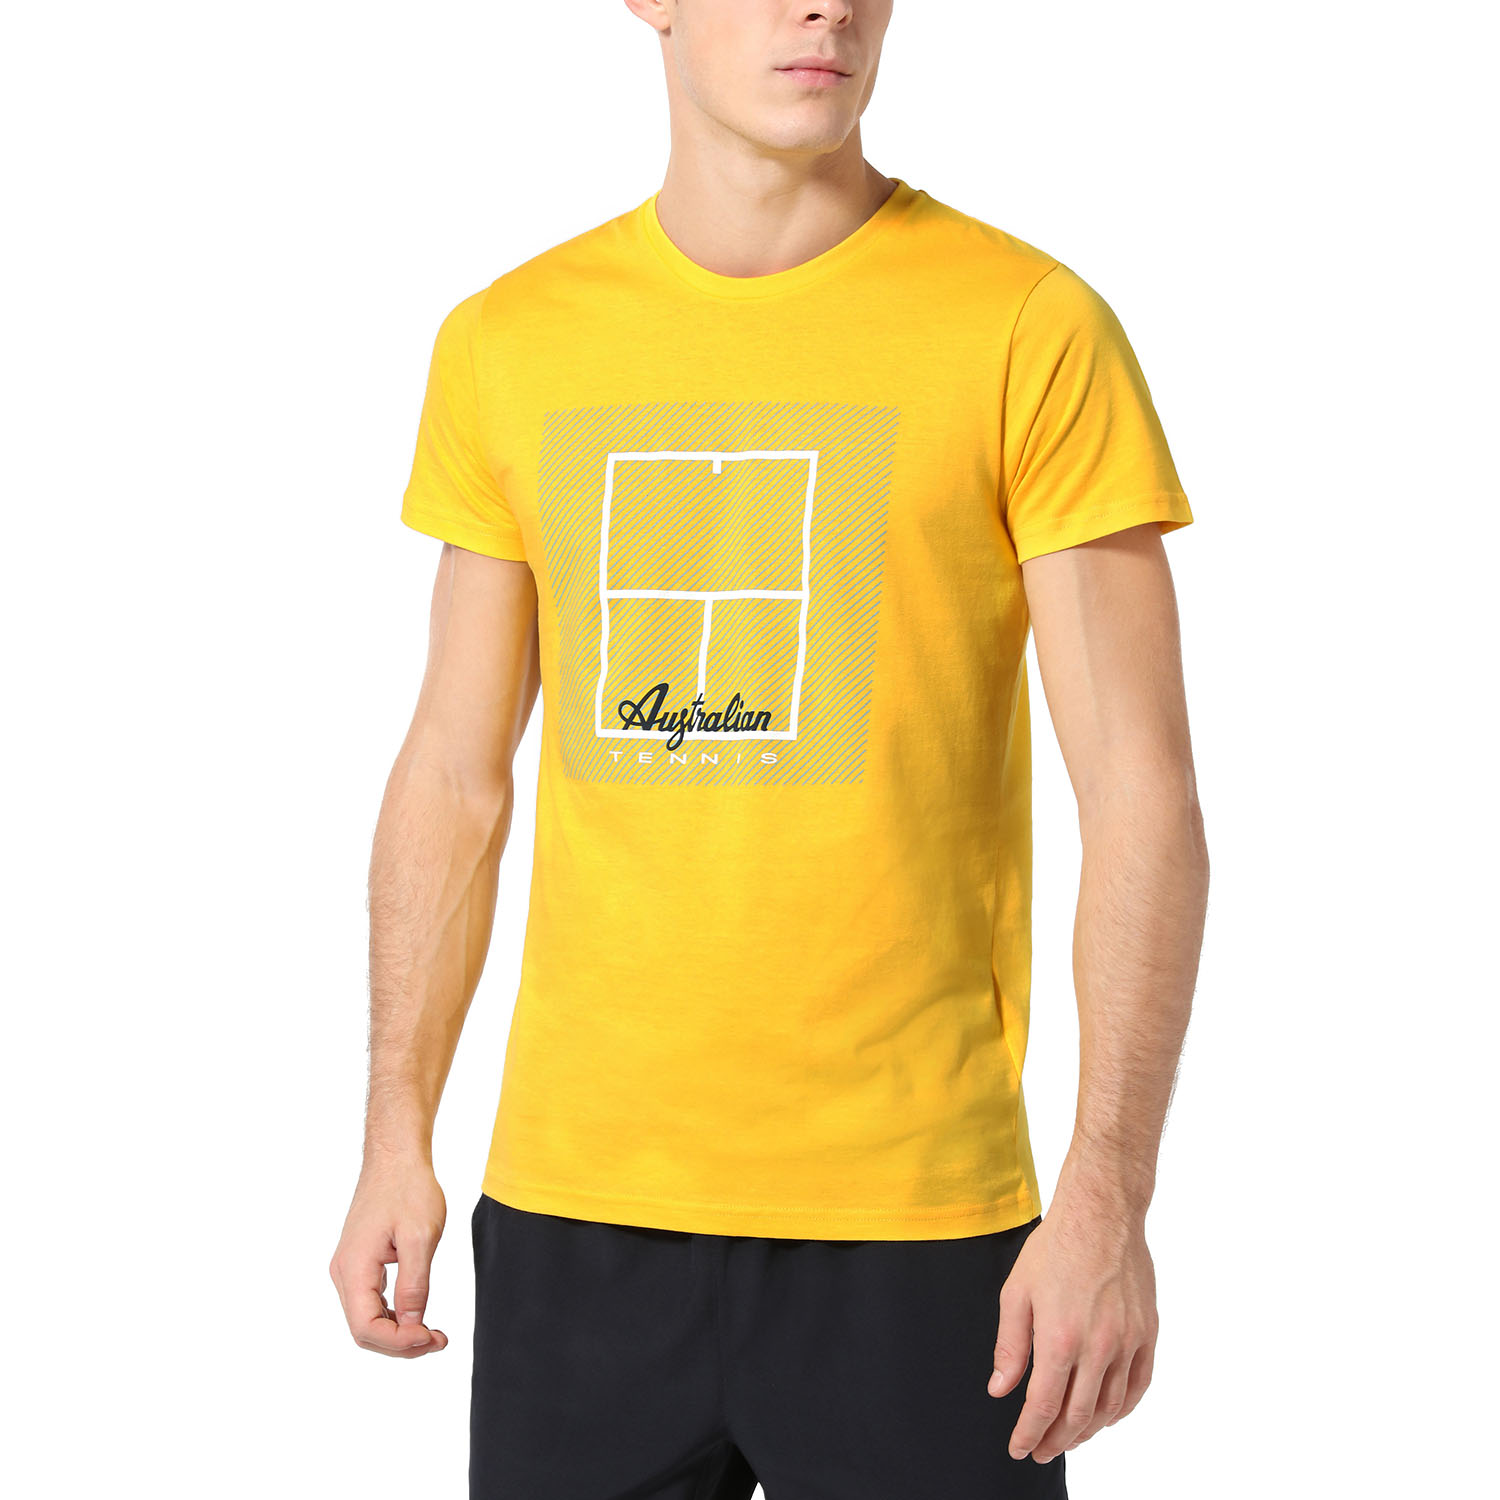 Australian Court T-Shirt - Zafferano